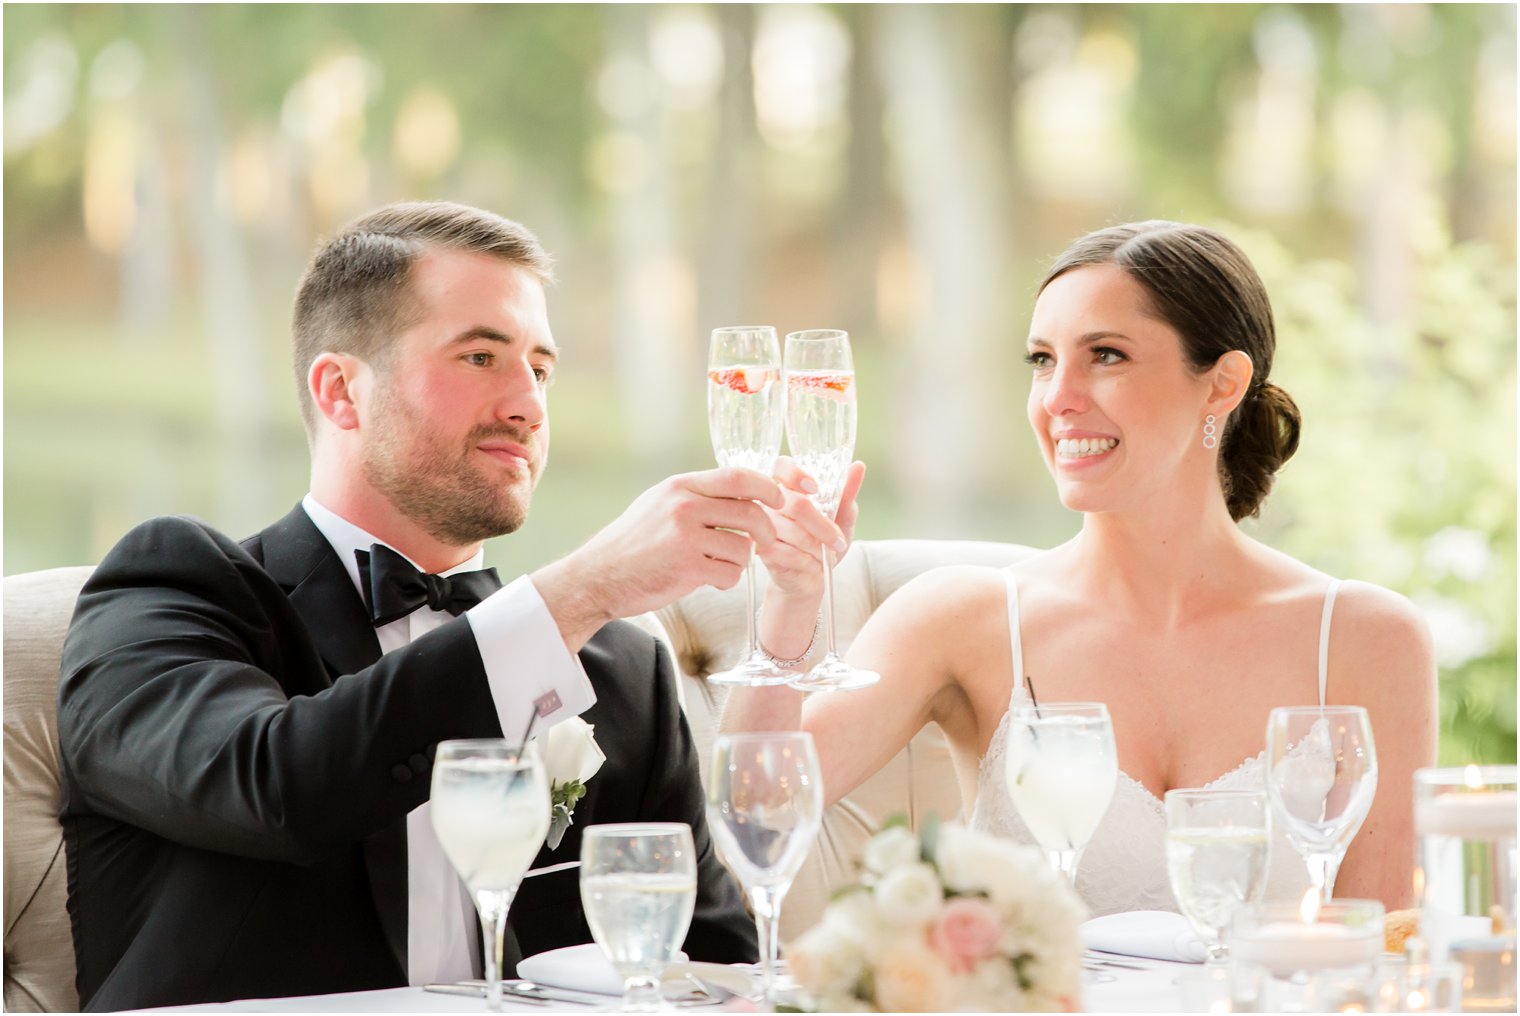 Bride and groom toasting | Idalia Photography